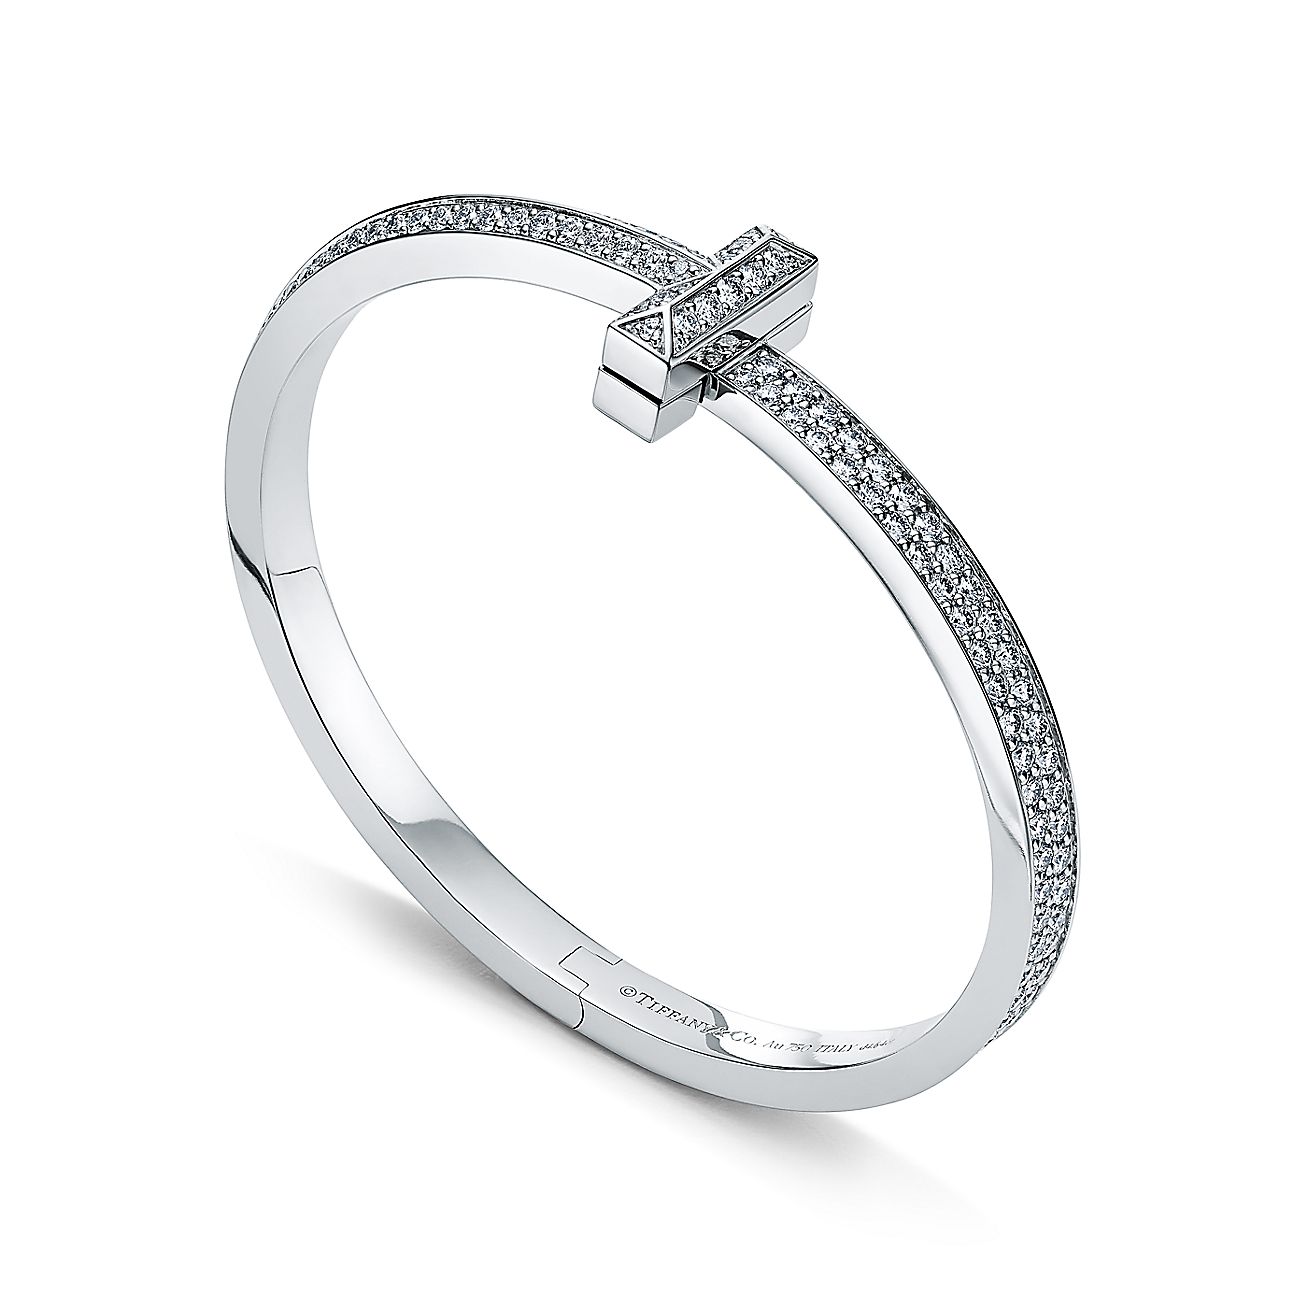 Tiffany T pavé diamond hinged bangle in 18k white gold, large.